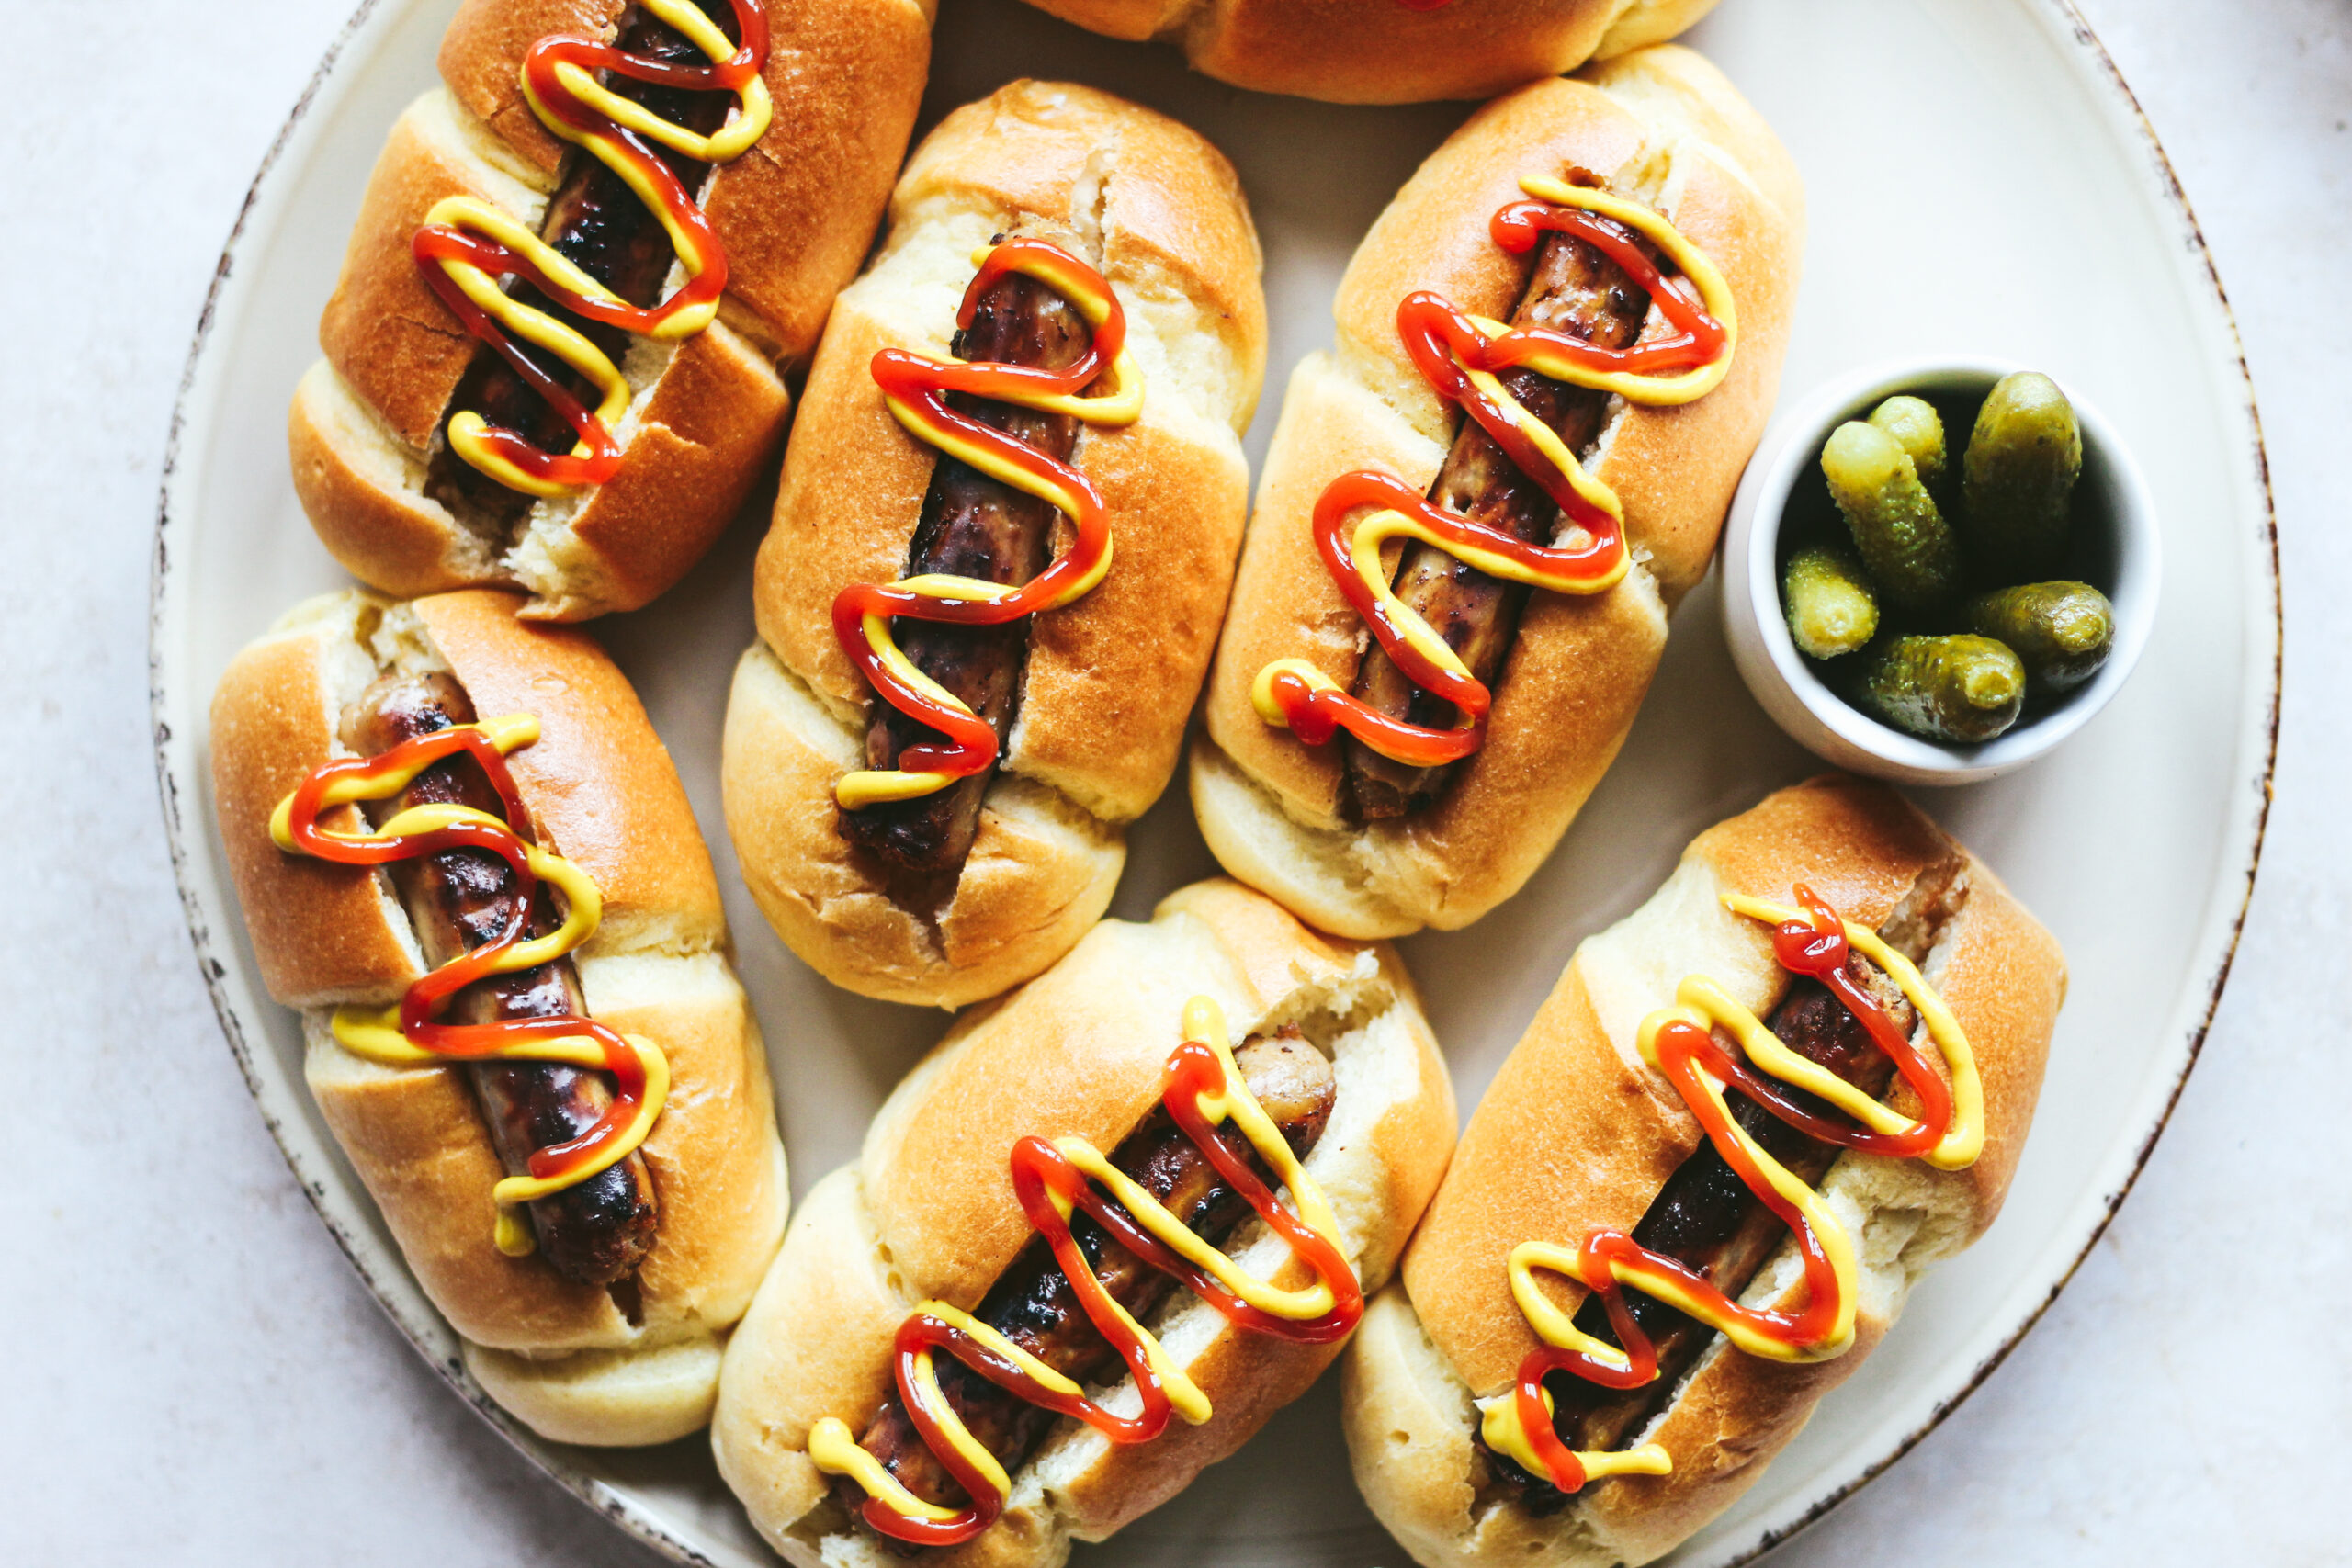 Tastiest chipolata hot dogs using Naked pork chipolatas.